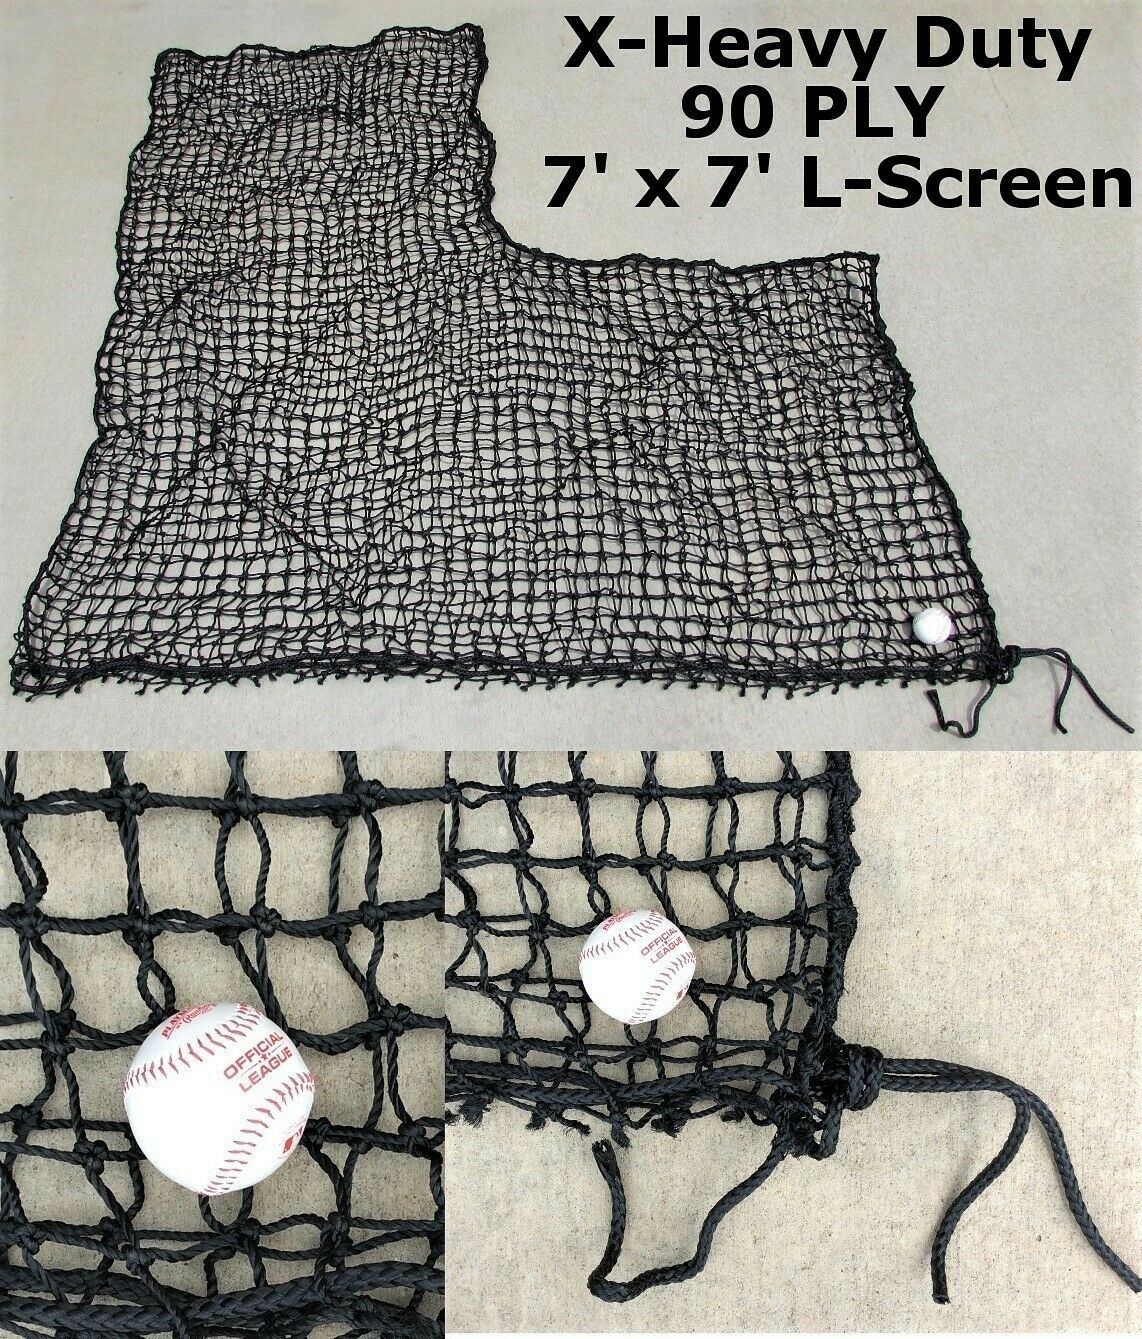 Replacement L-screen Net 7' X 7' #60 90 Ply X Heavy Duty Pitcher L Screen